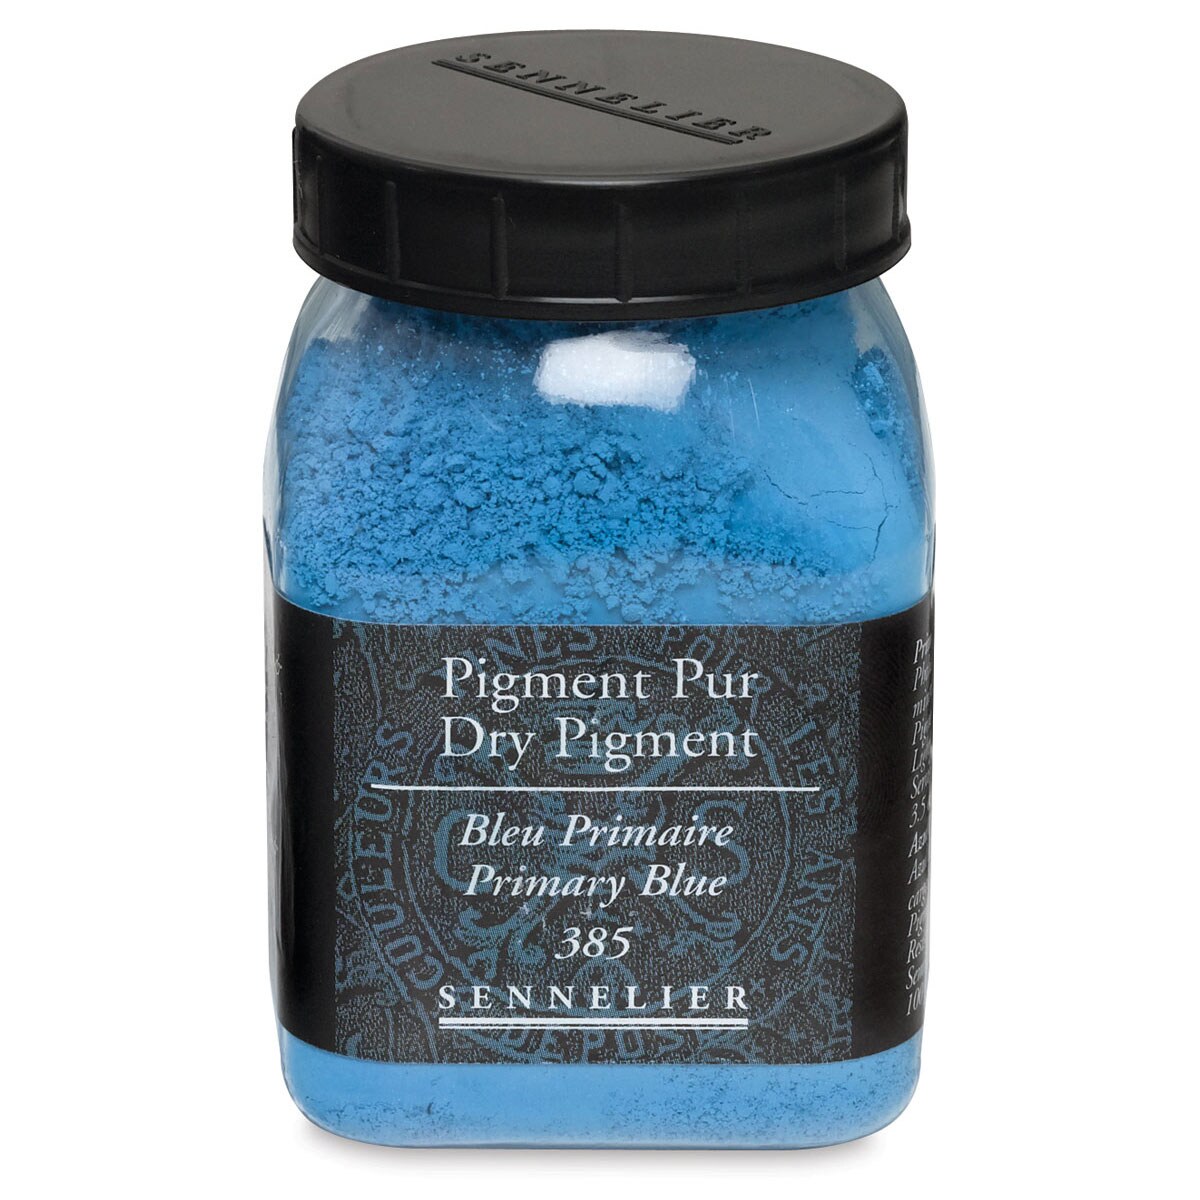 Sennelier Dry Pigment - Primary Blue, 100 g jar